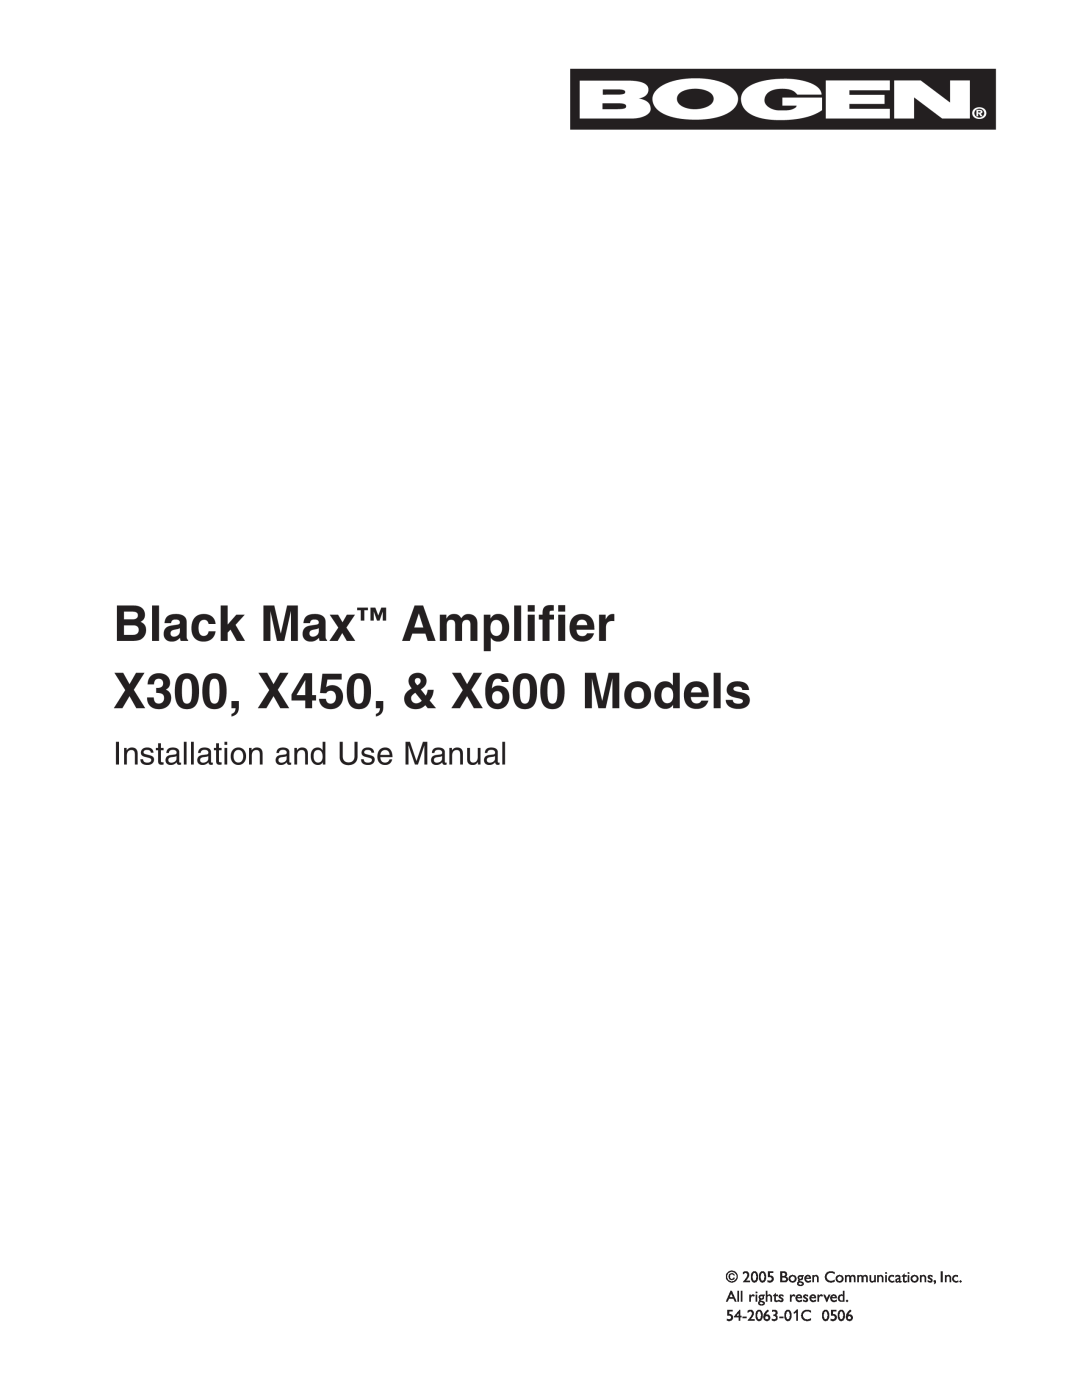 Bogen manual Black Max Amplifier X300, X450, & X600 Models, Installation and Use Manual 